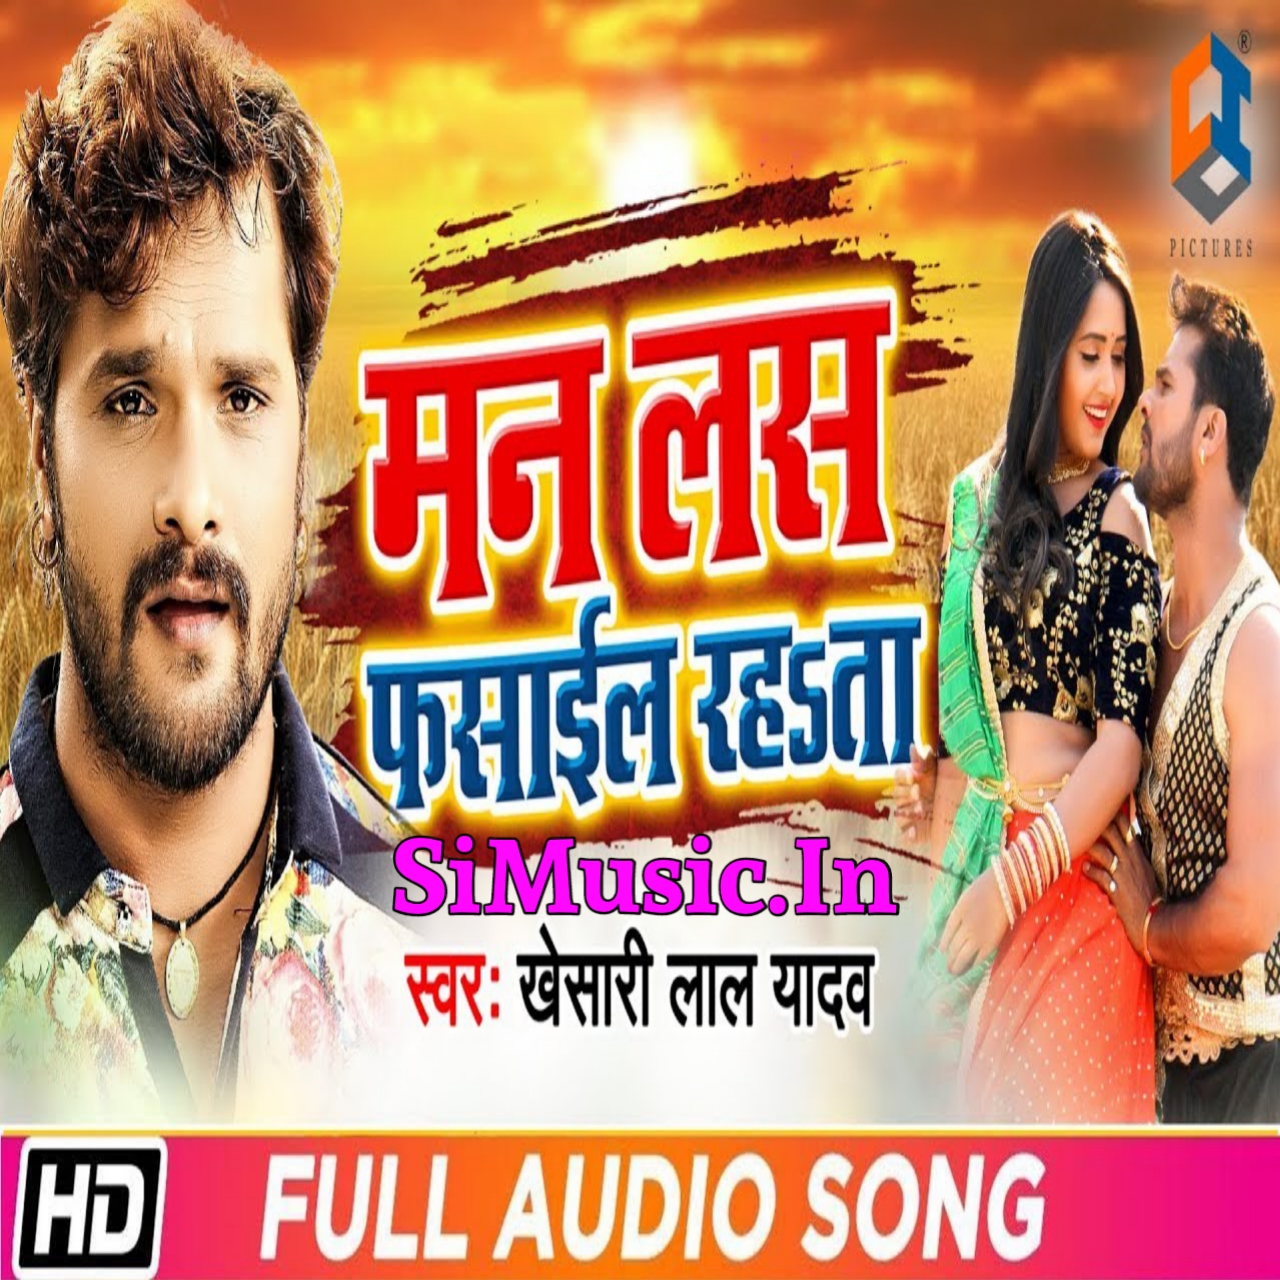 Man Las Fasail Rahata Khesari Lal Yadav 2020 Chaita Mp3 Songs